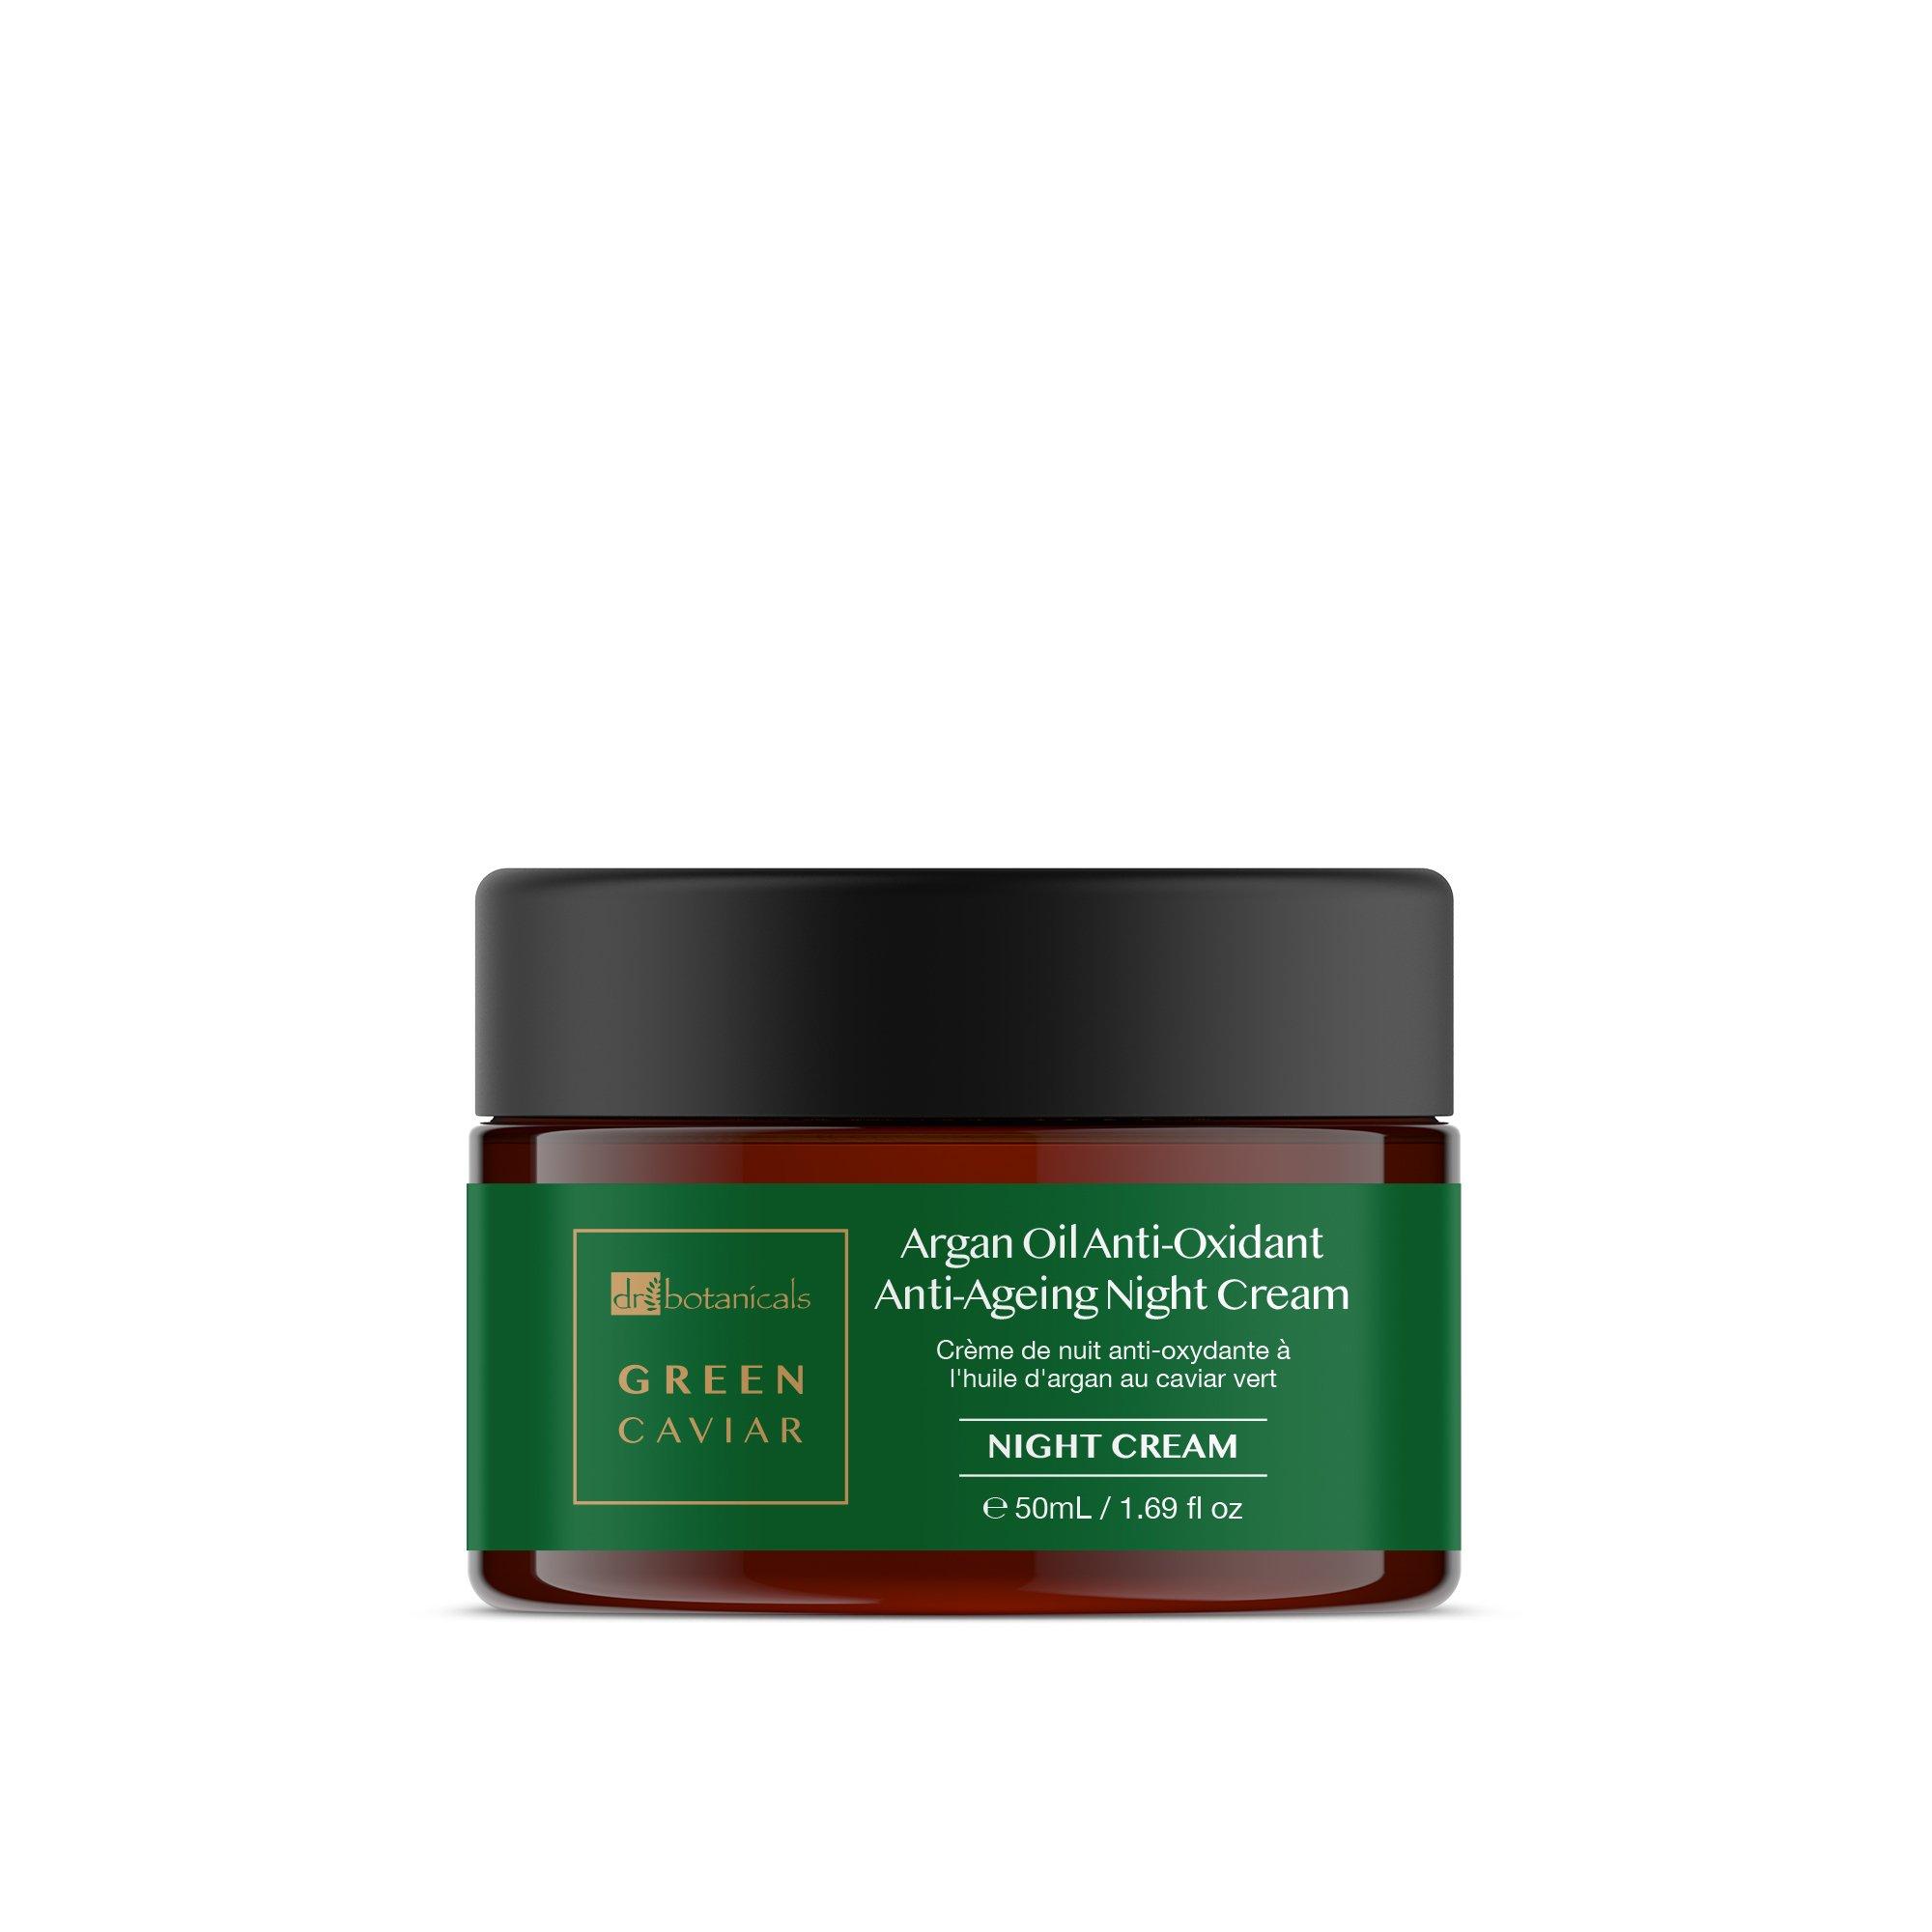 Green Caviar & Argan Oil Anti-Oxidant Anti-Ageing Night Cream